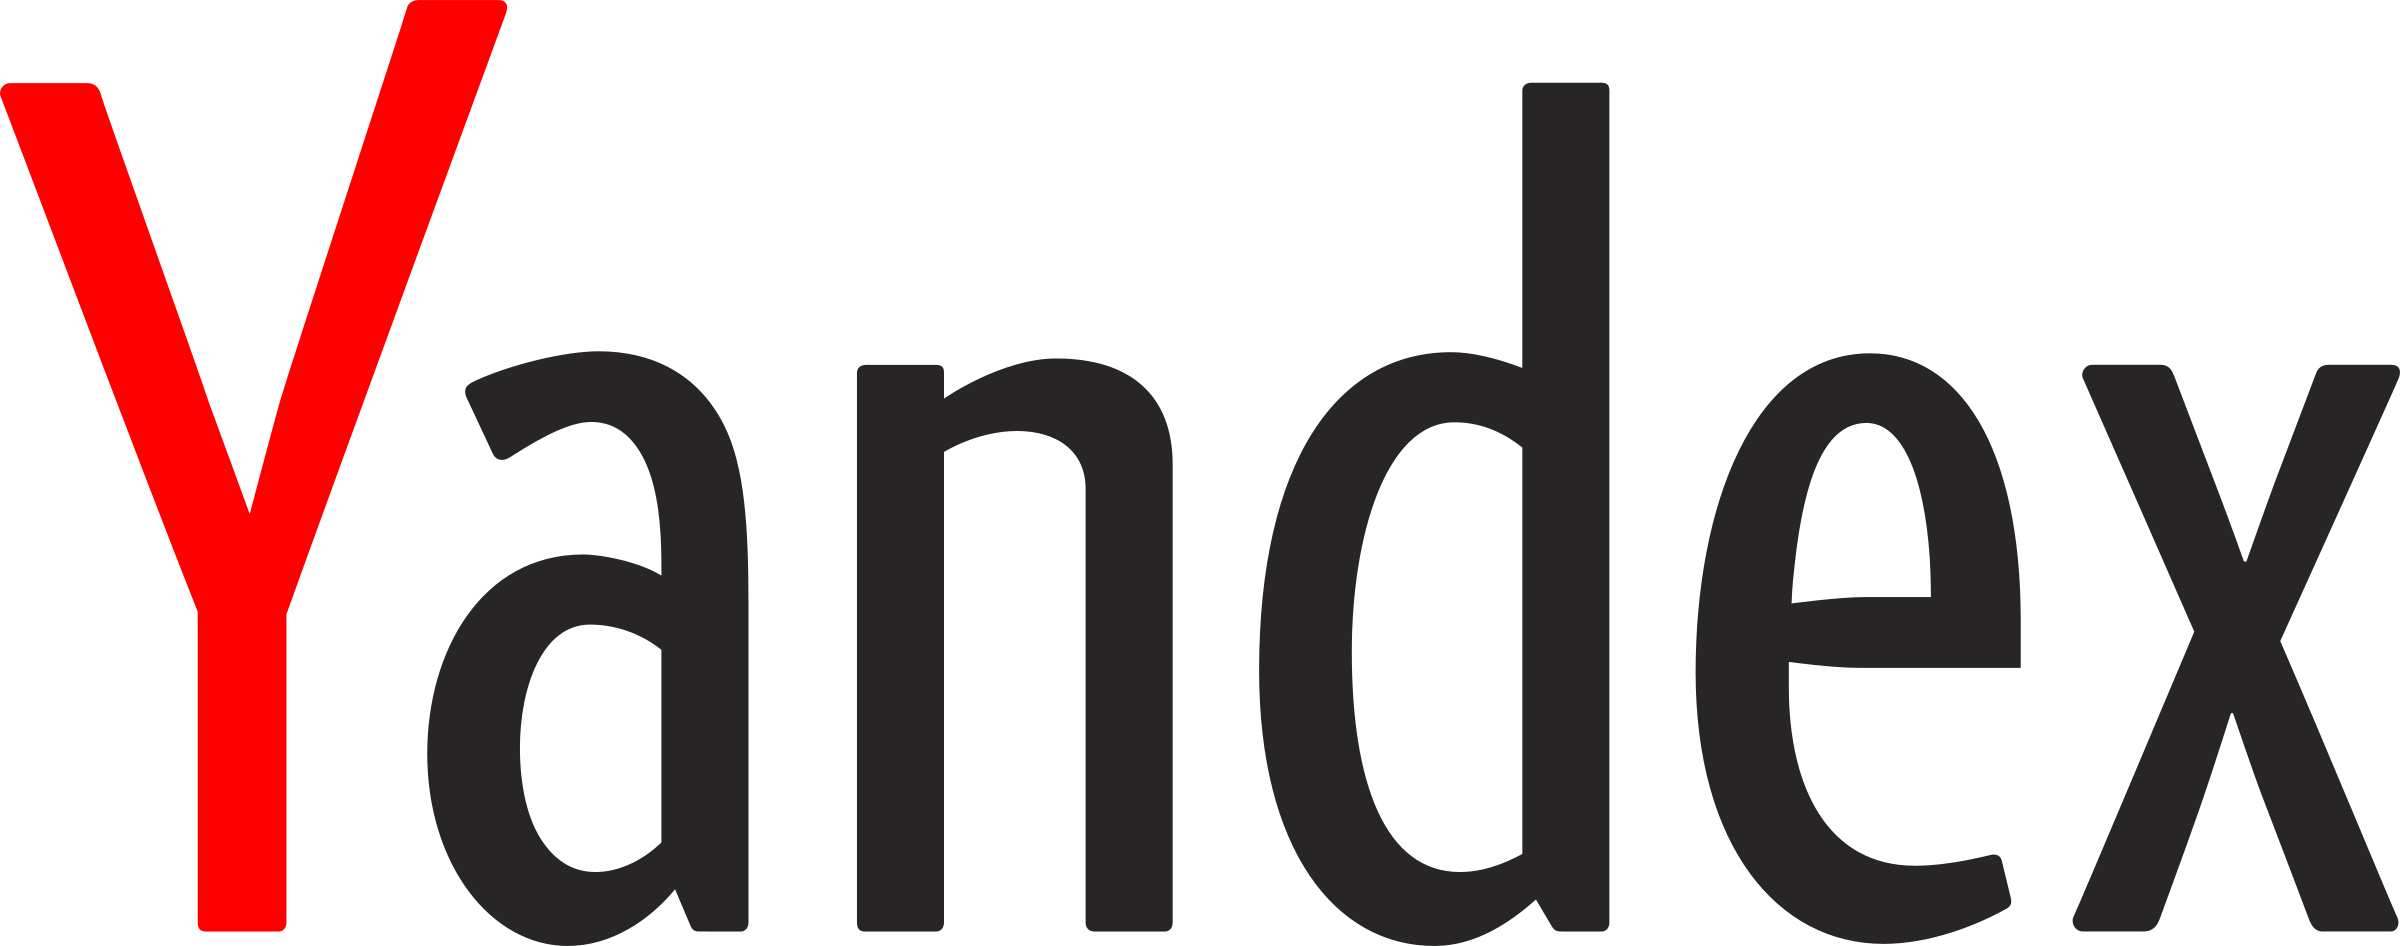 Yandex Logo PNG Clipart